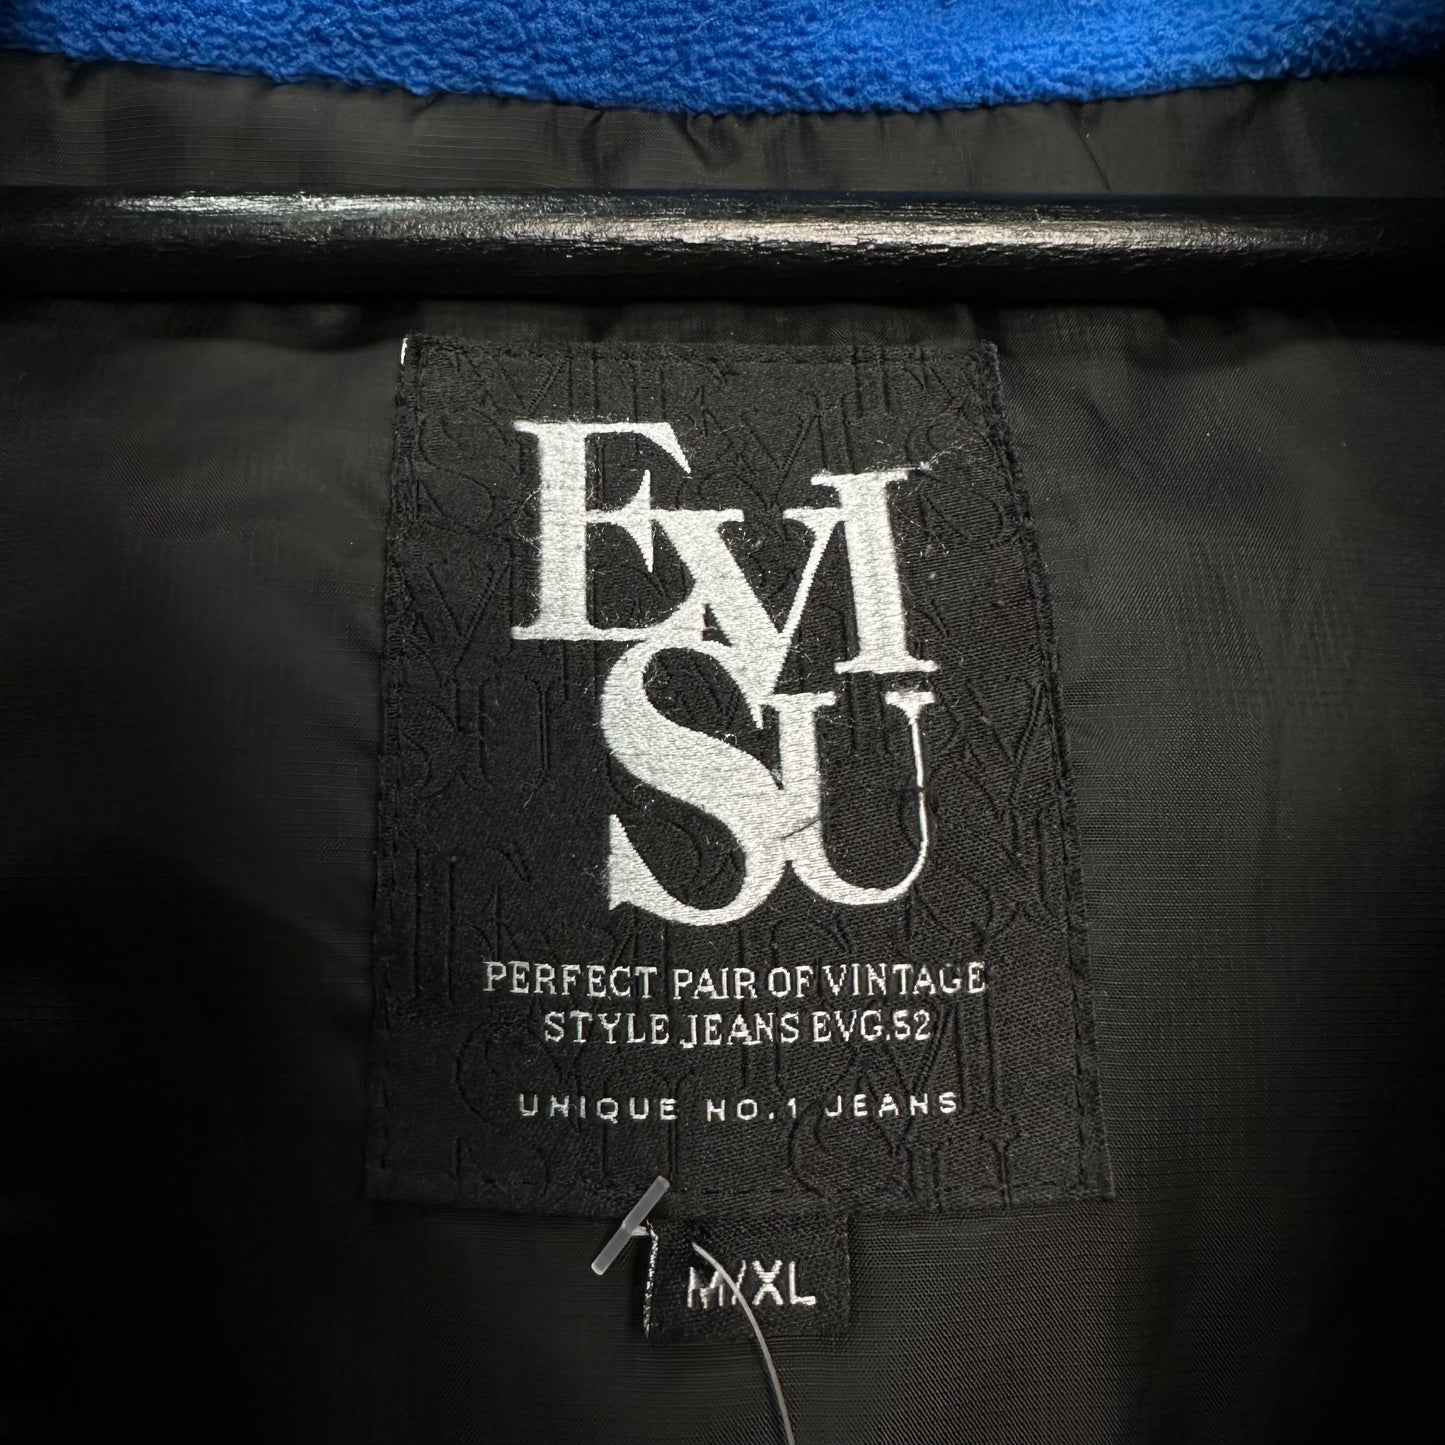 Evisu Puffer Jacket - M/XL